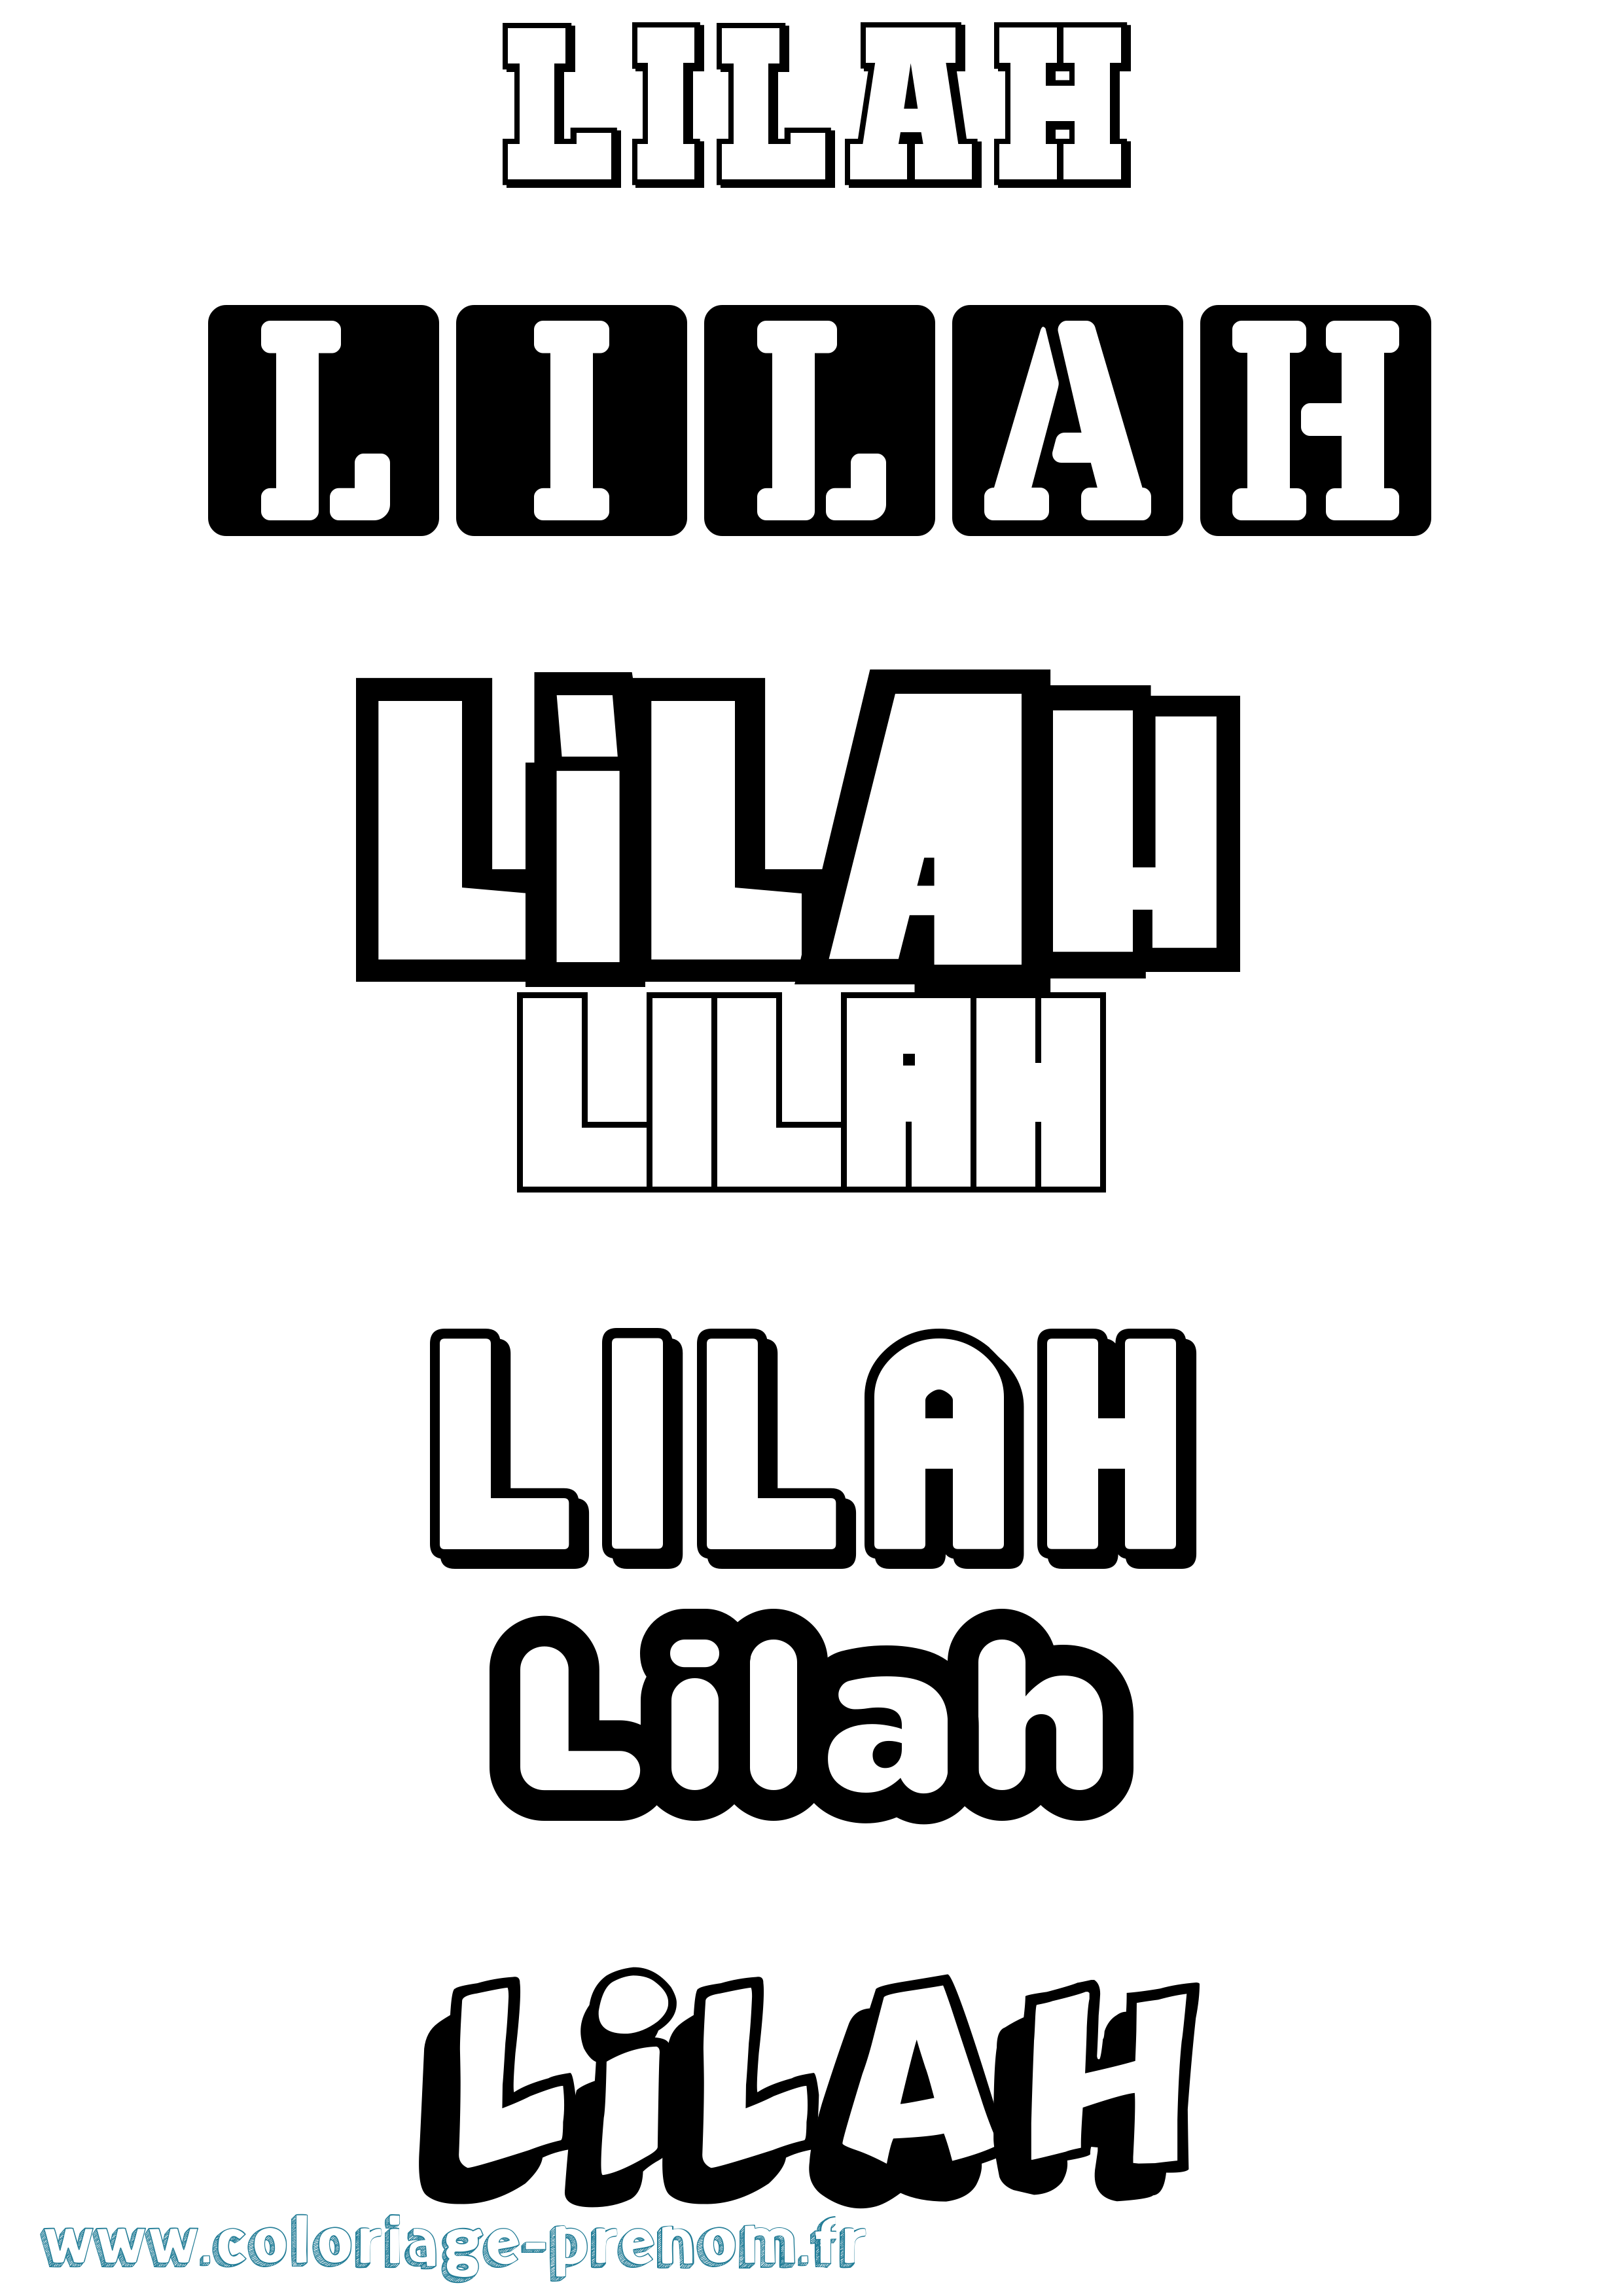 Coloriage prénom Lilah Simple